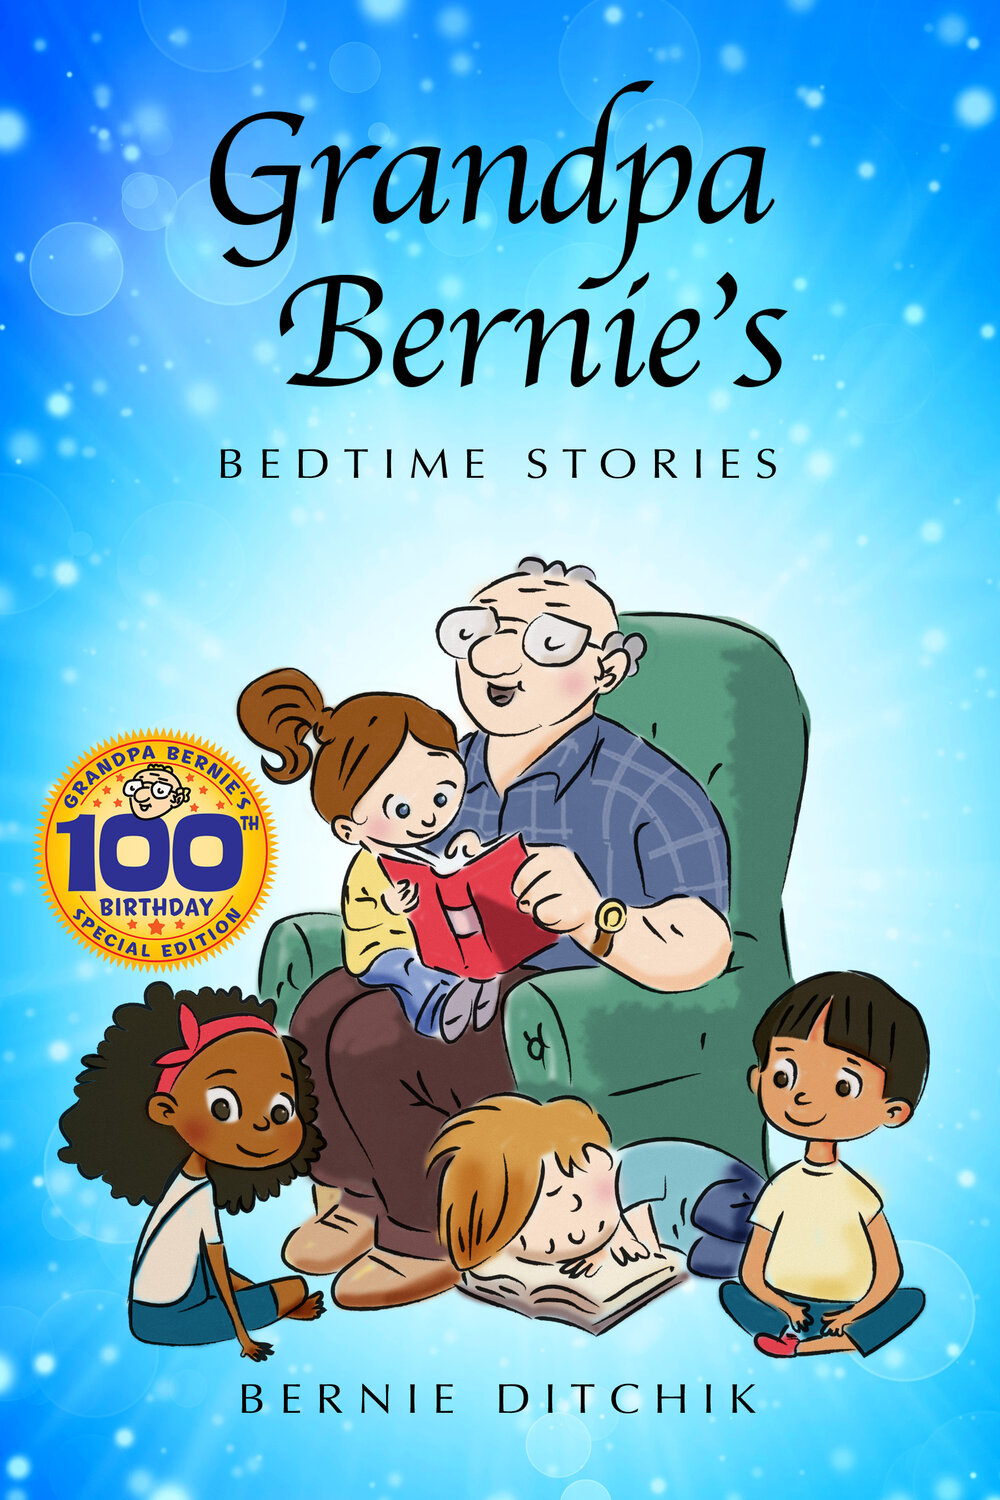 100th Birthday Grandpa Bernie was Bernie Ditchik’s most recent children’s book.